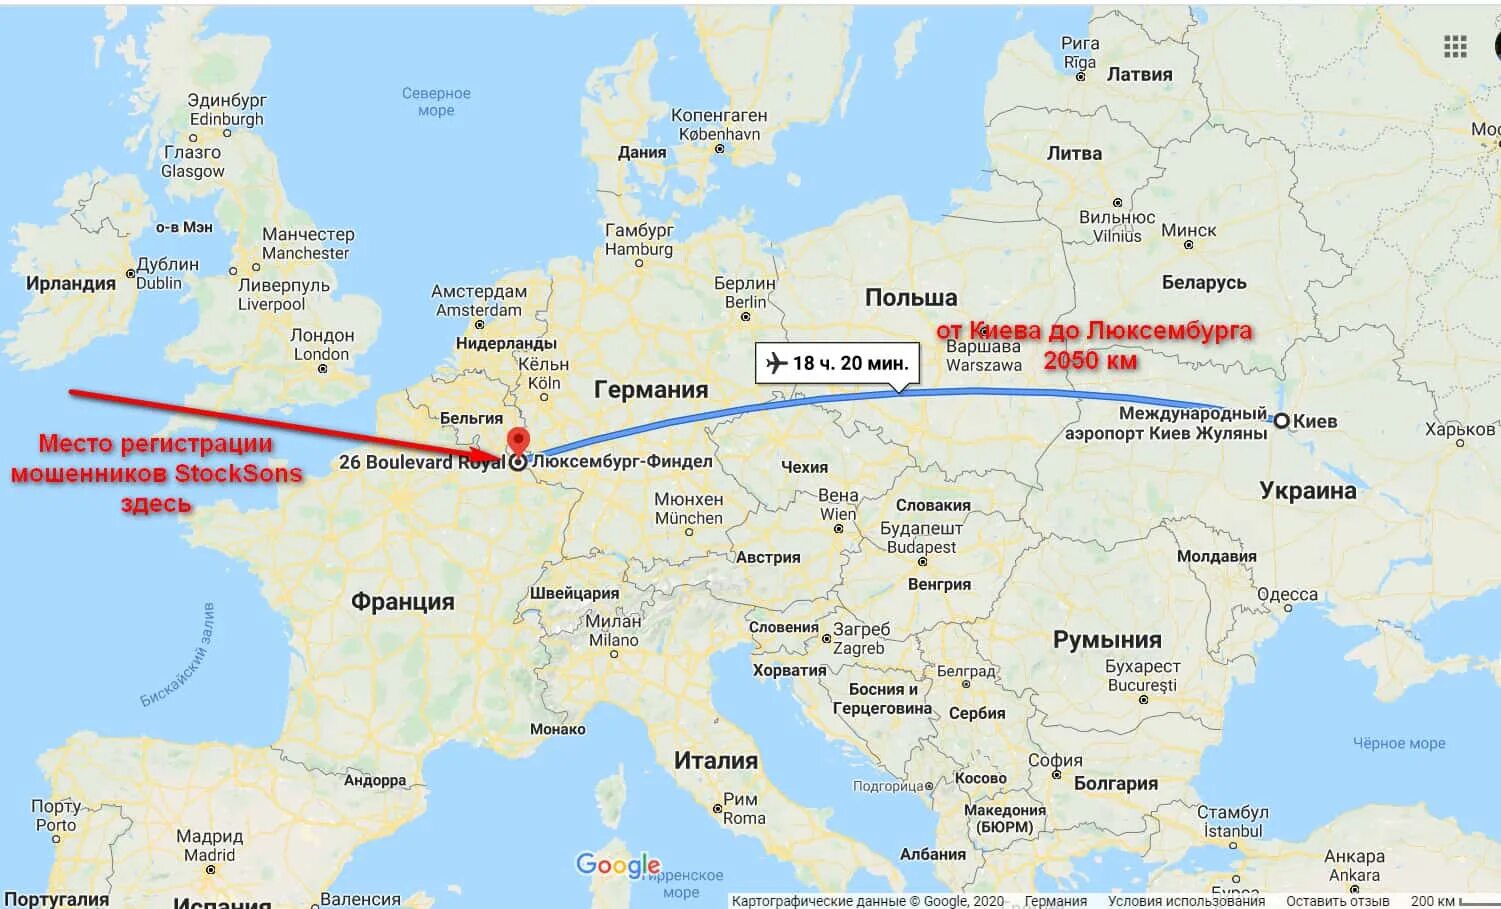 Расстояние от России до Украины. Расстояние от Киева. Сколько от России до Киева. Киев на карте.